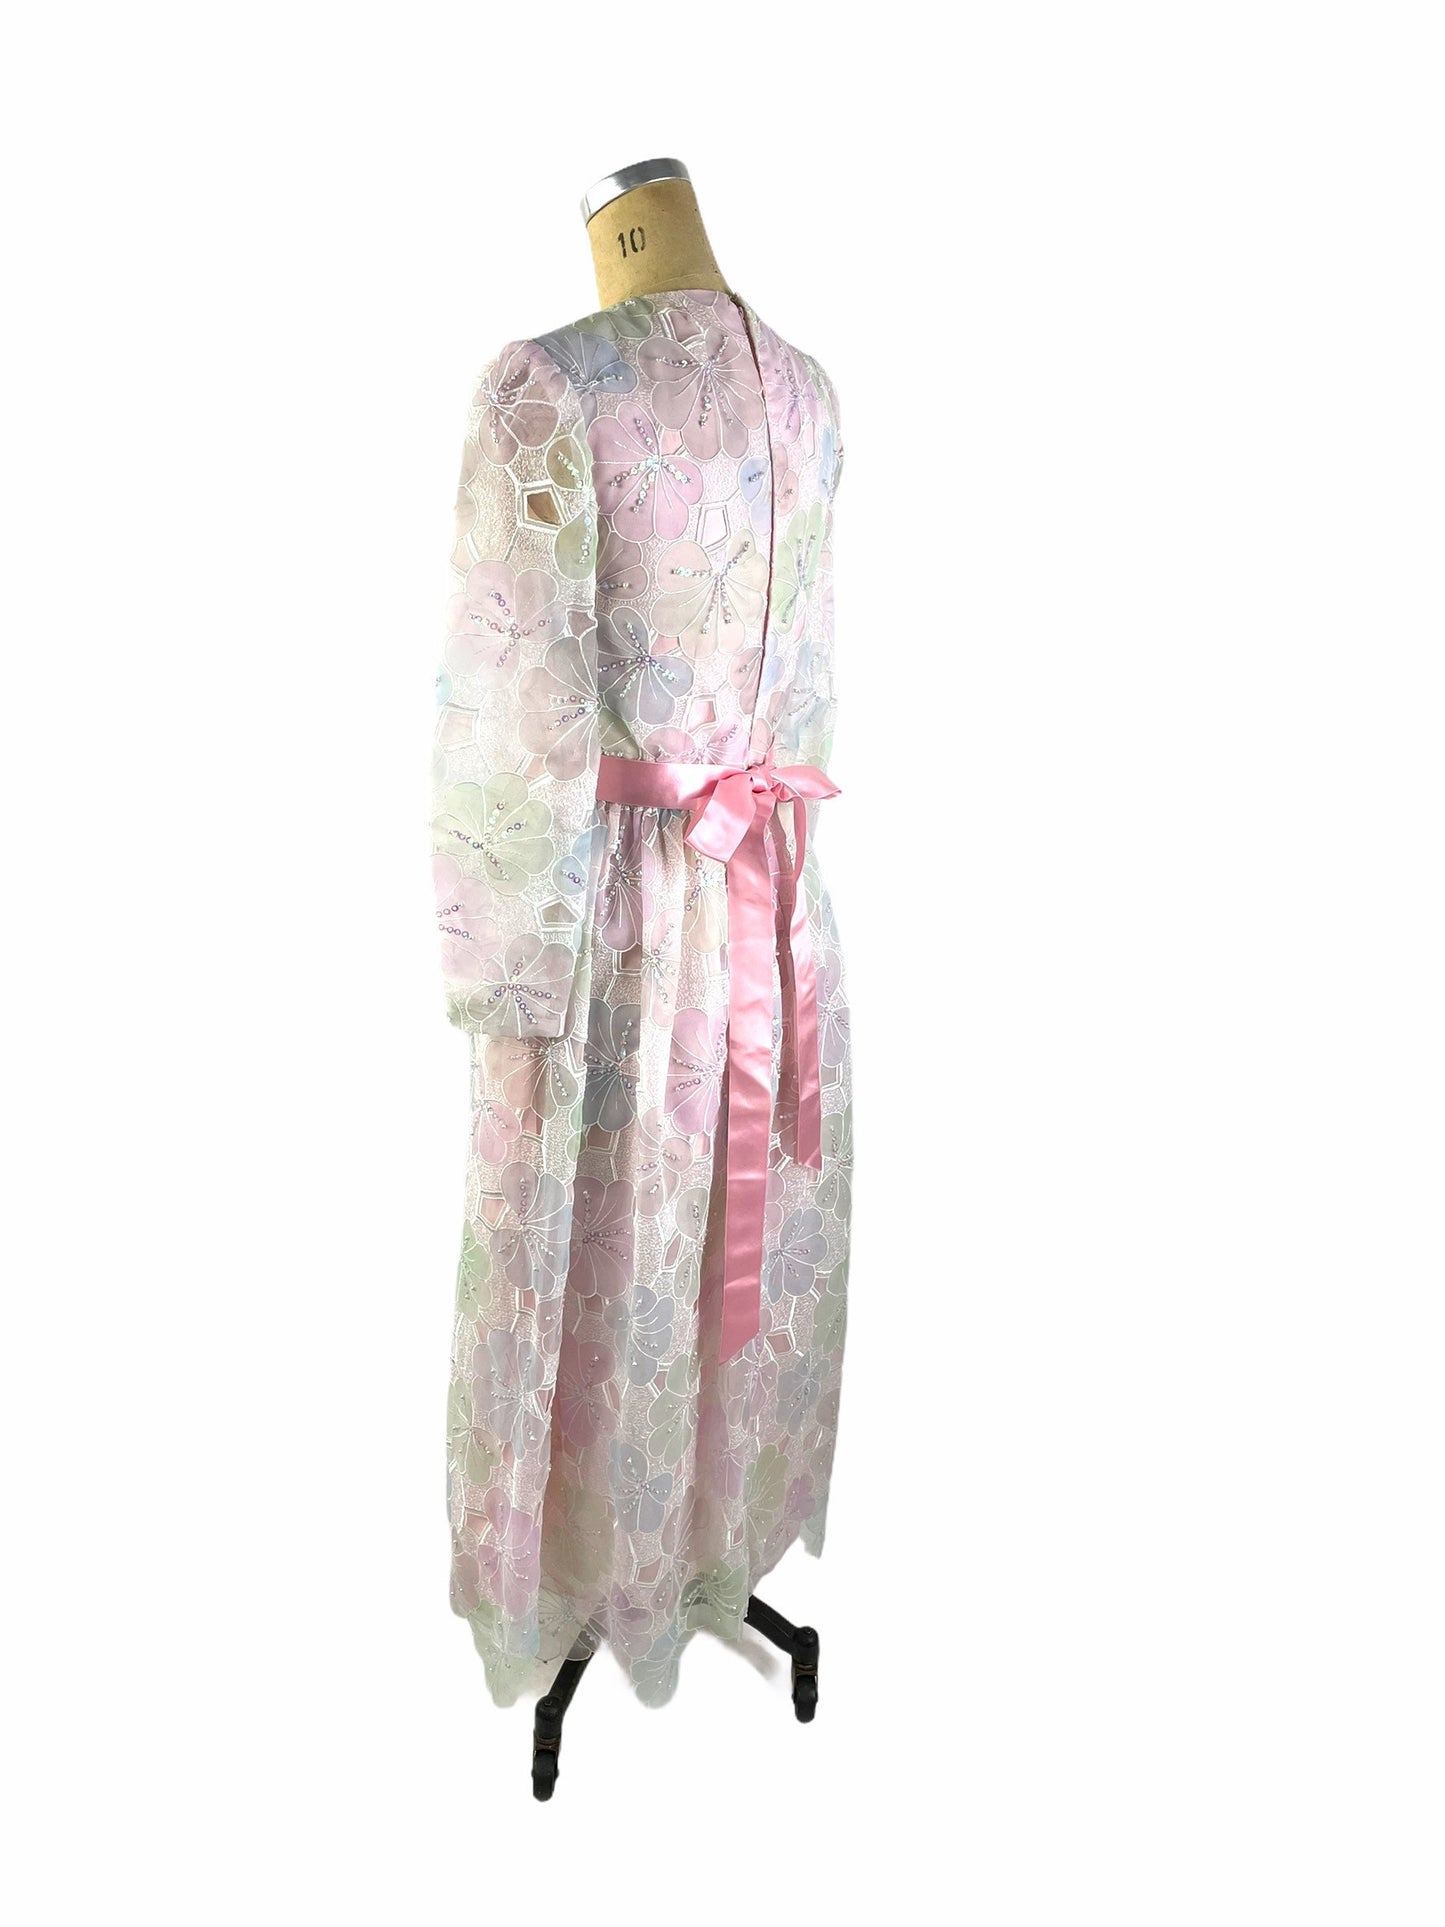 1980s pastel floral sequin tea length sheer dress by Richilene size M